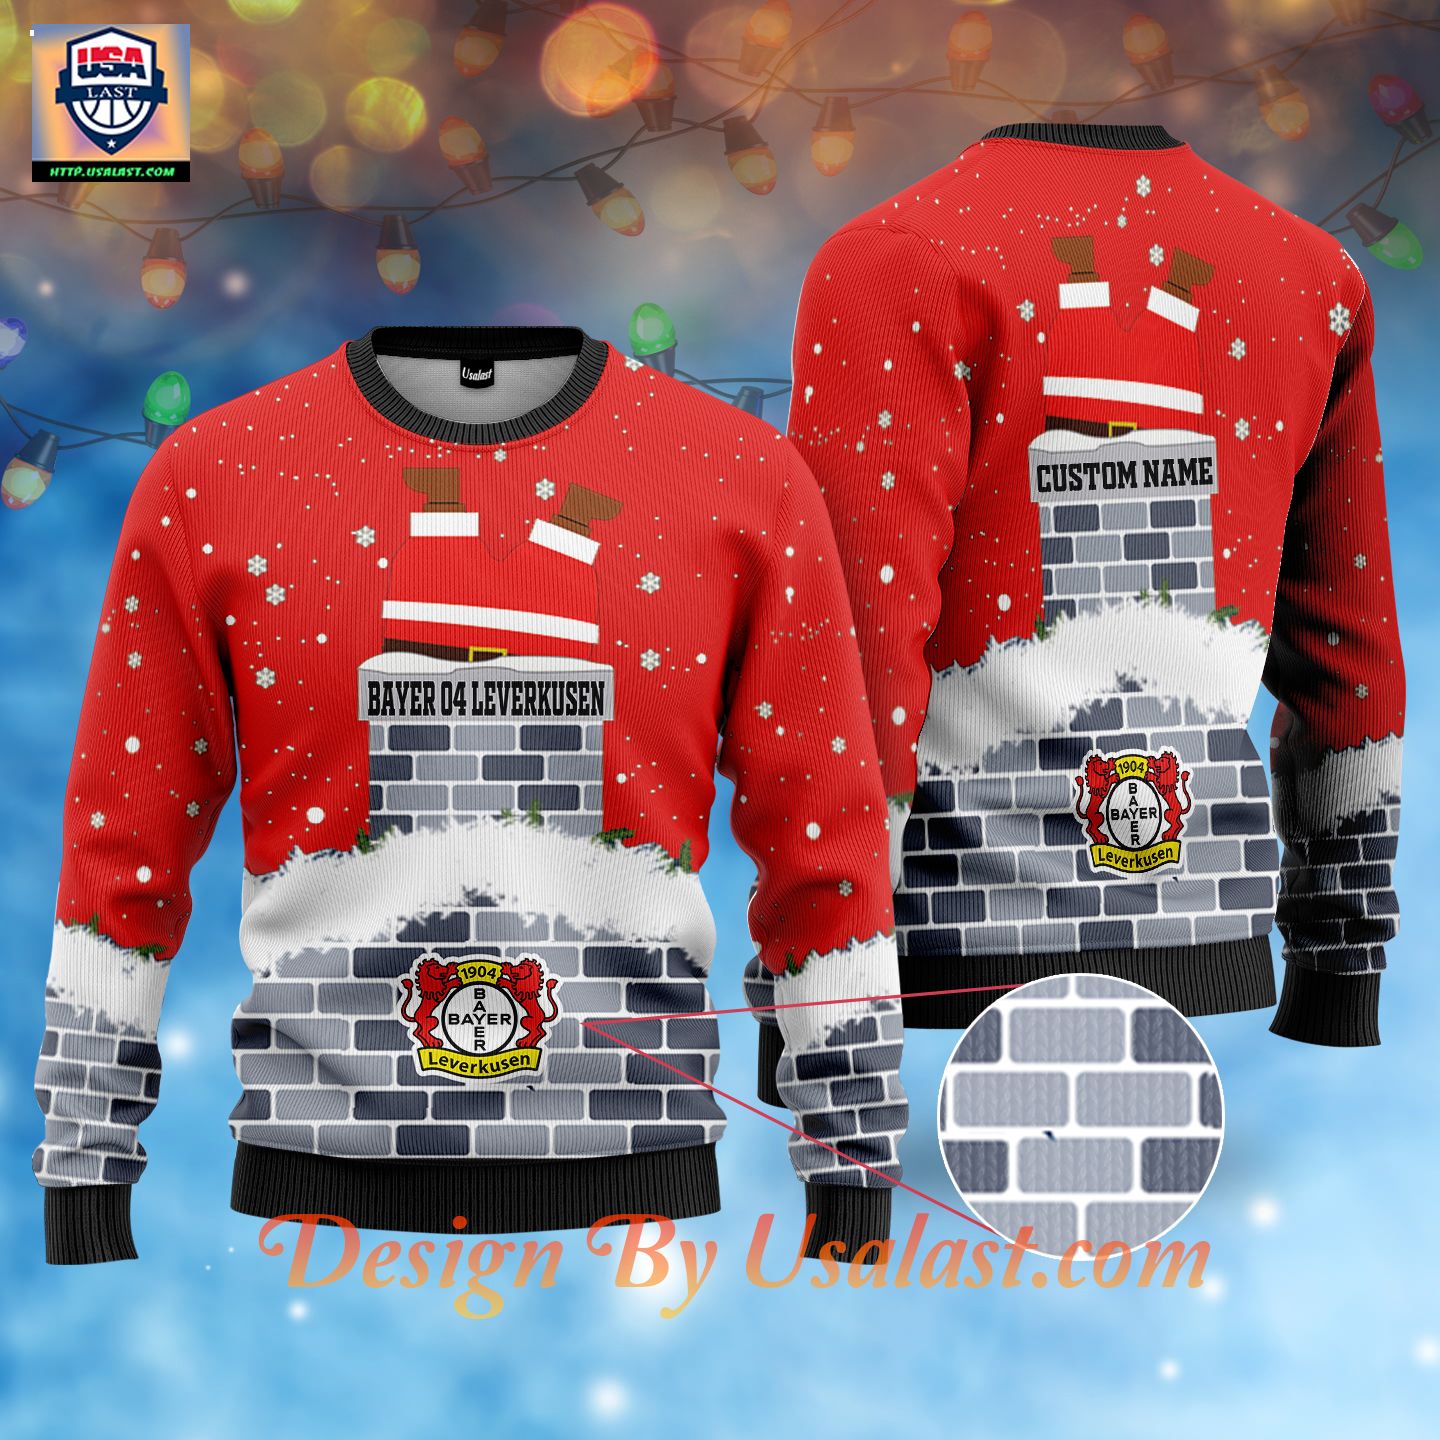 Bayer 04 Leverkusen Custom Name Ugly Christmas Sweater - Nice elegant click